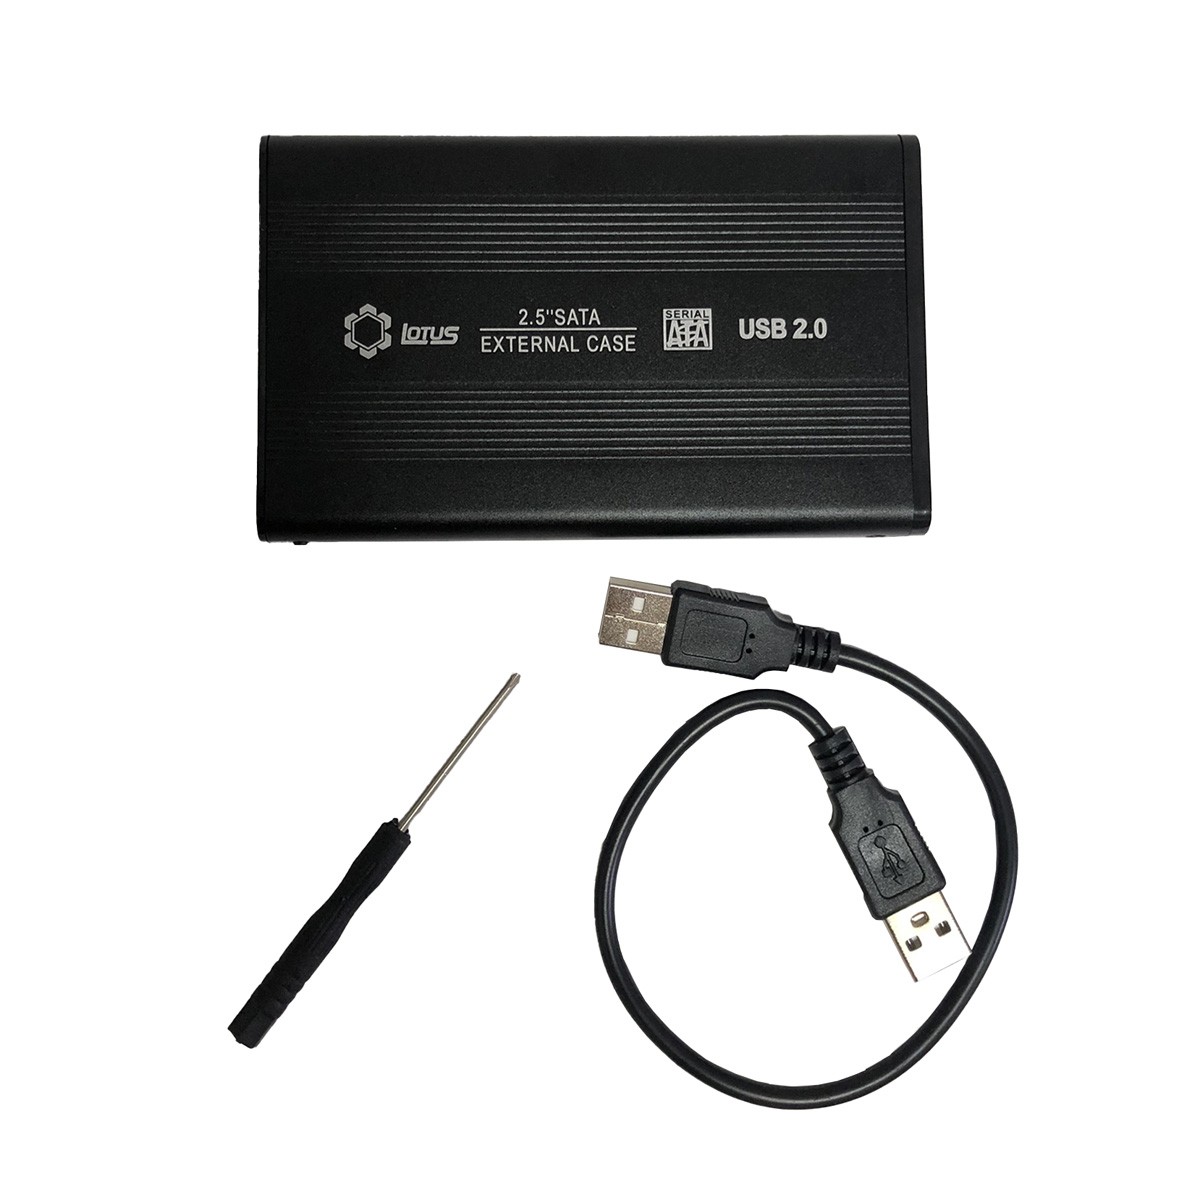 Case para HD Externo 2.5 Polegadas USB 2.0 LT-256 Lotus